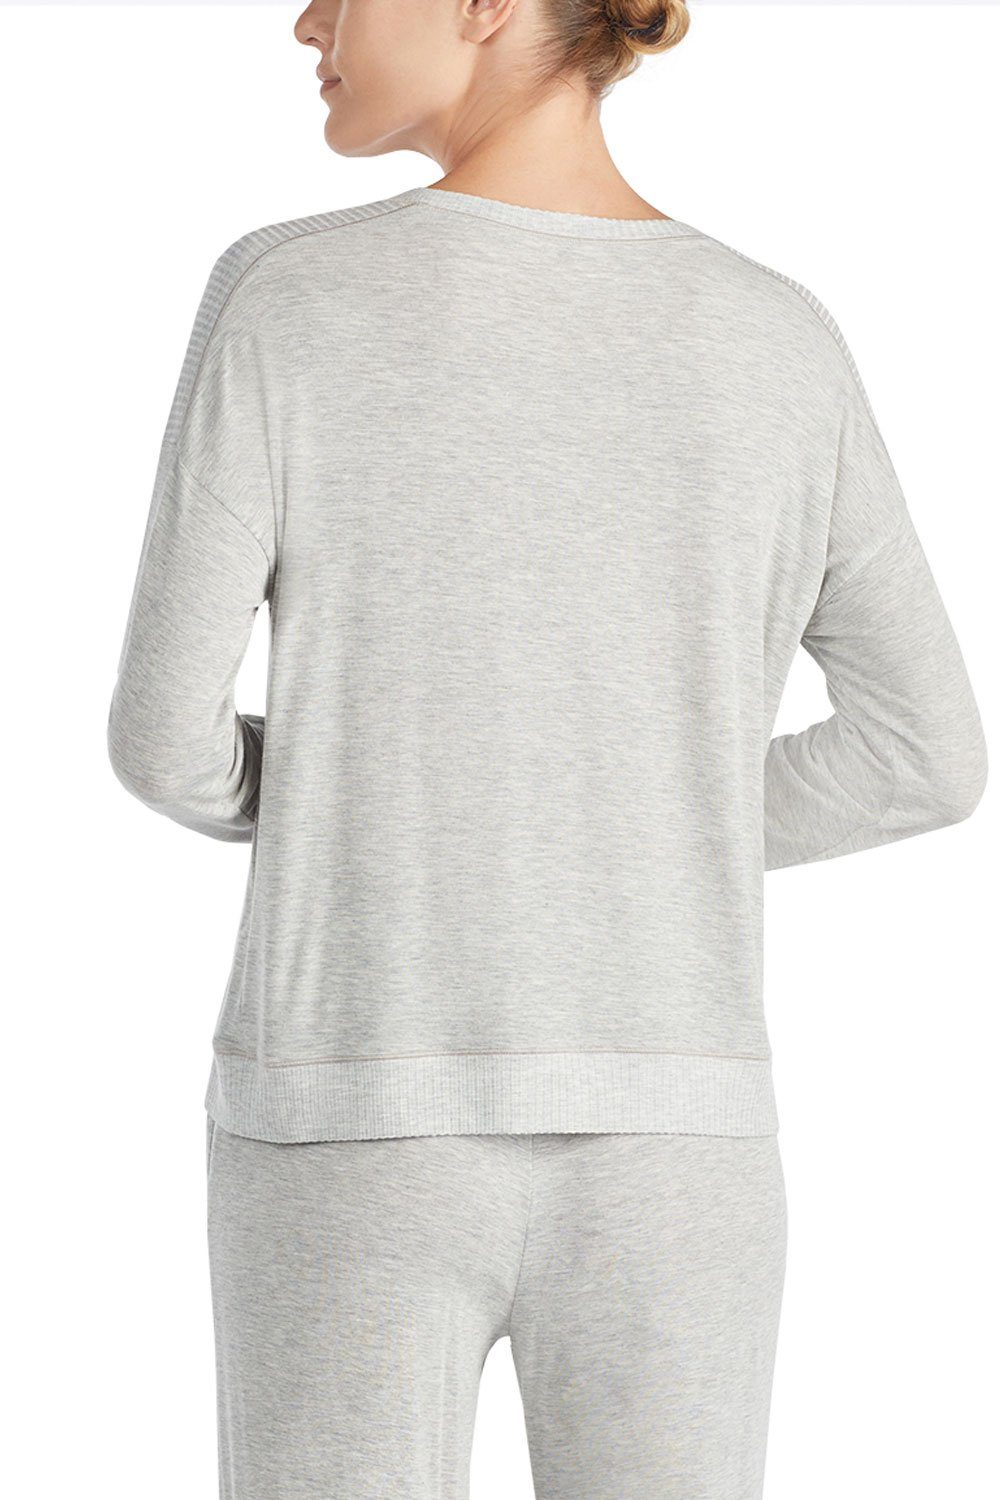 Top YI3419330 DKNY grey heather Sleepshirt Essentials light